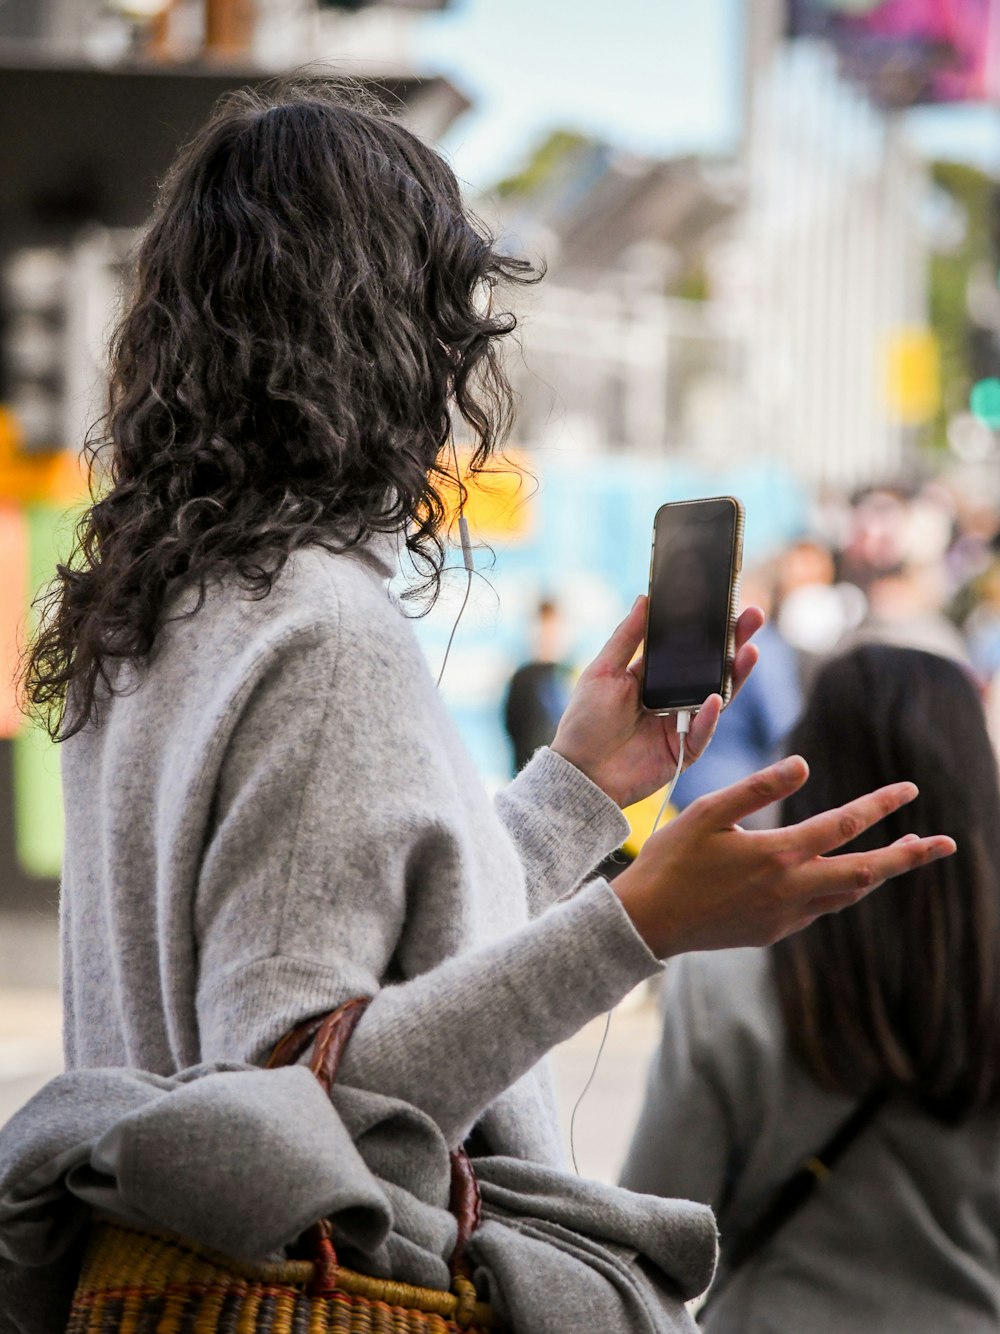 Femme en pull gris tenant un smartphone